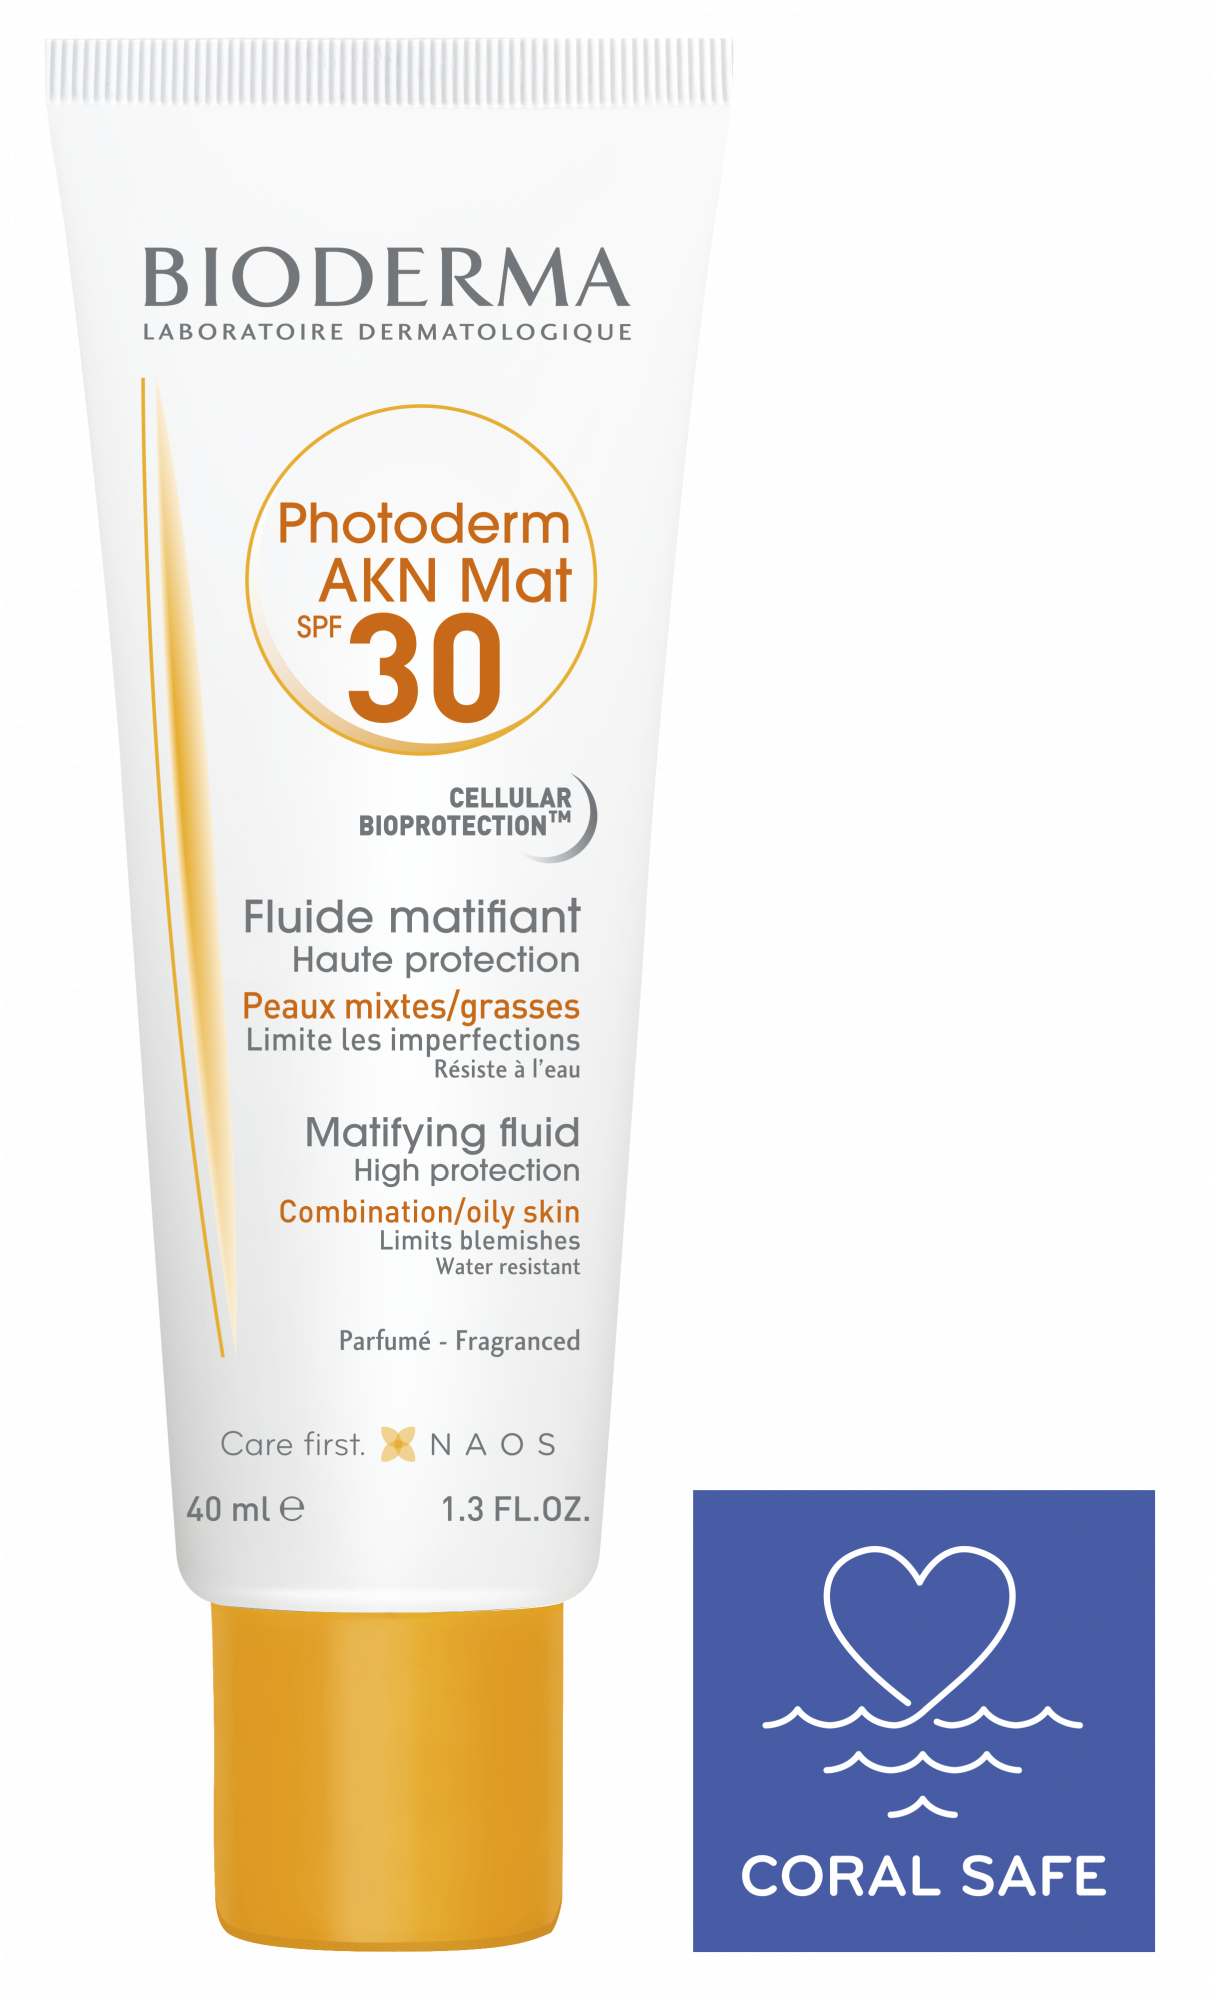 Photoderm AKN Mat SPF 30  Face sunscreen for oily skin & acne prone skin